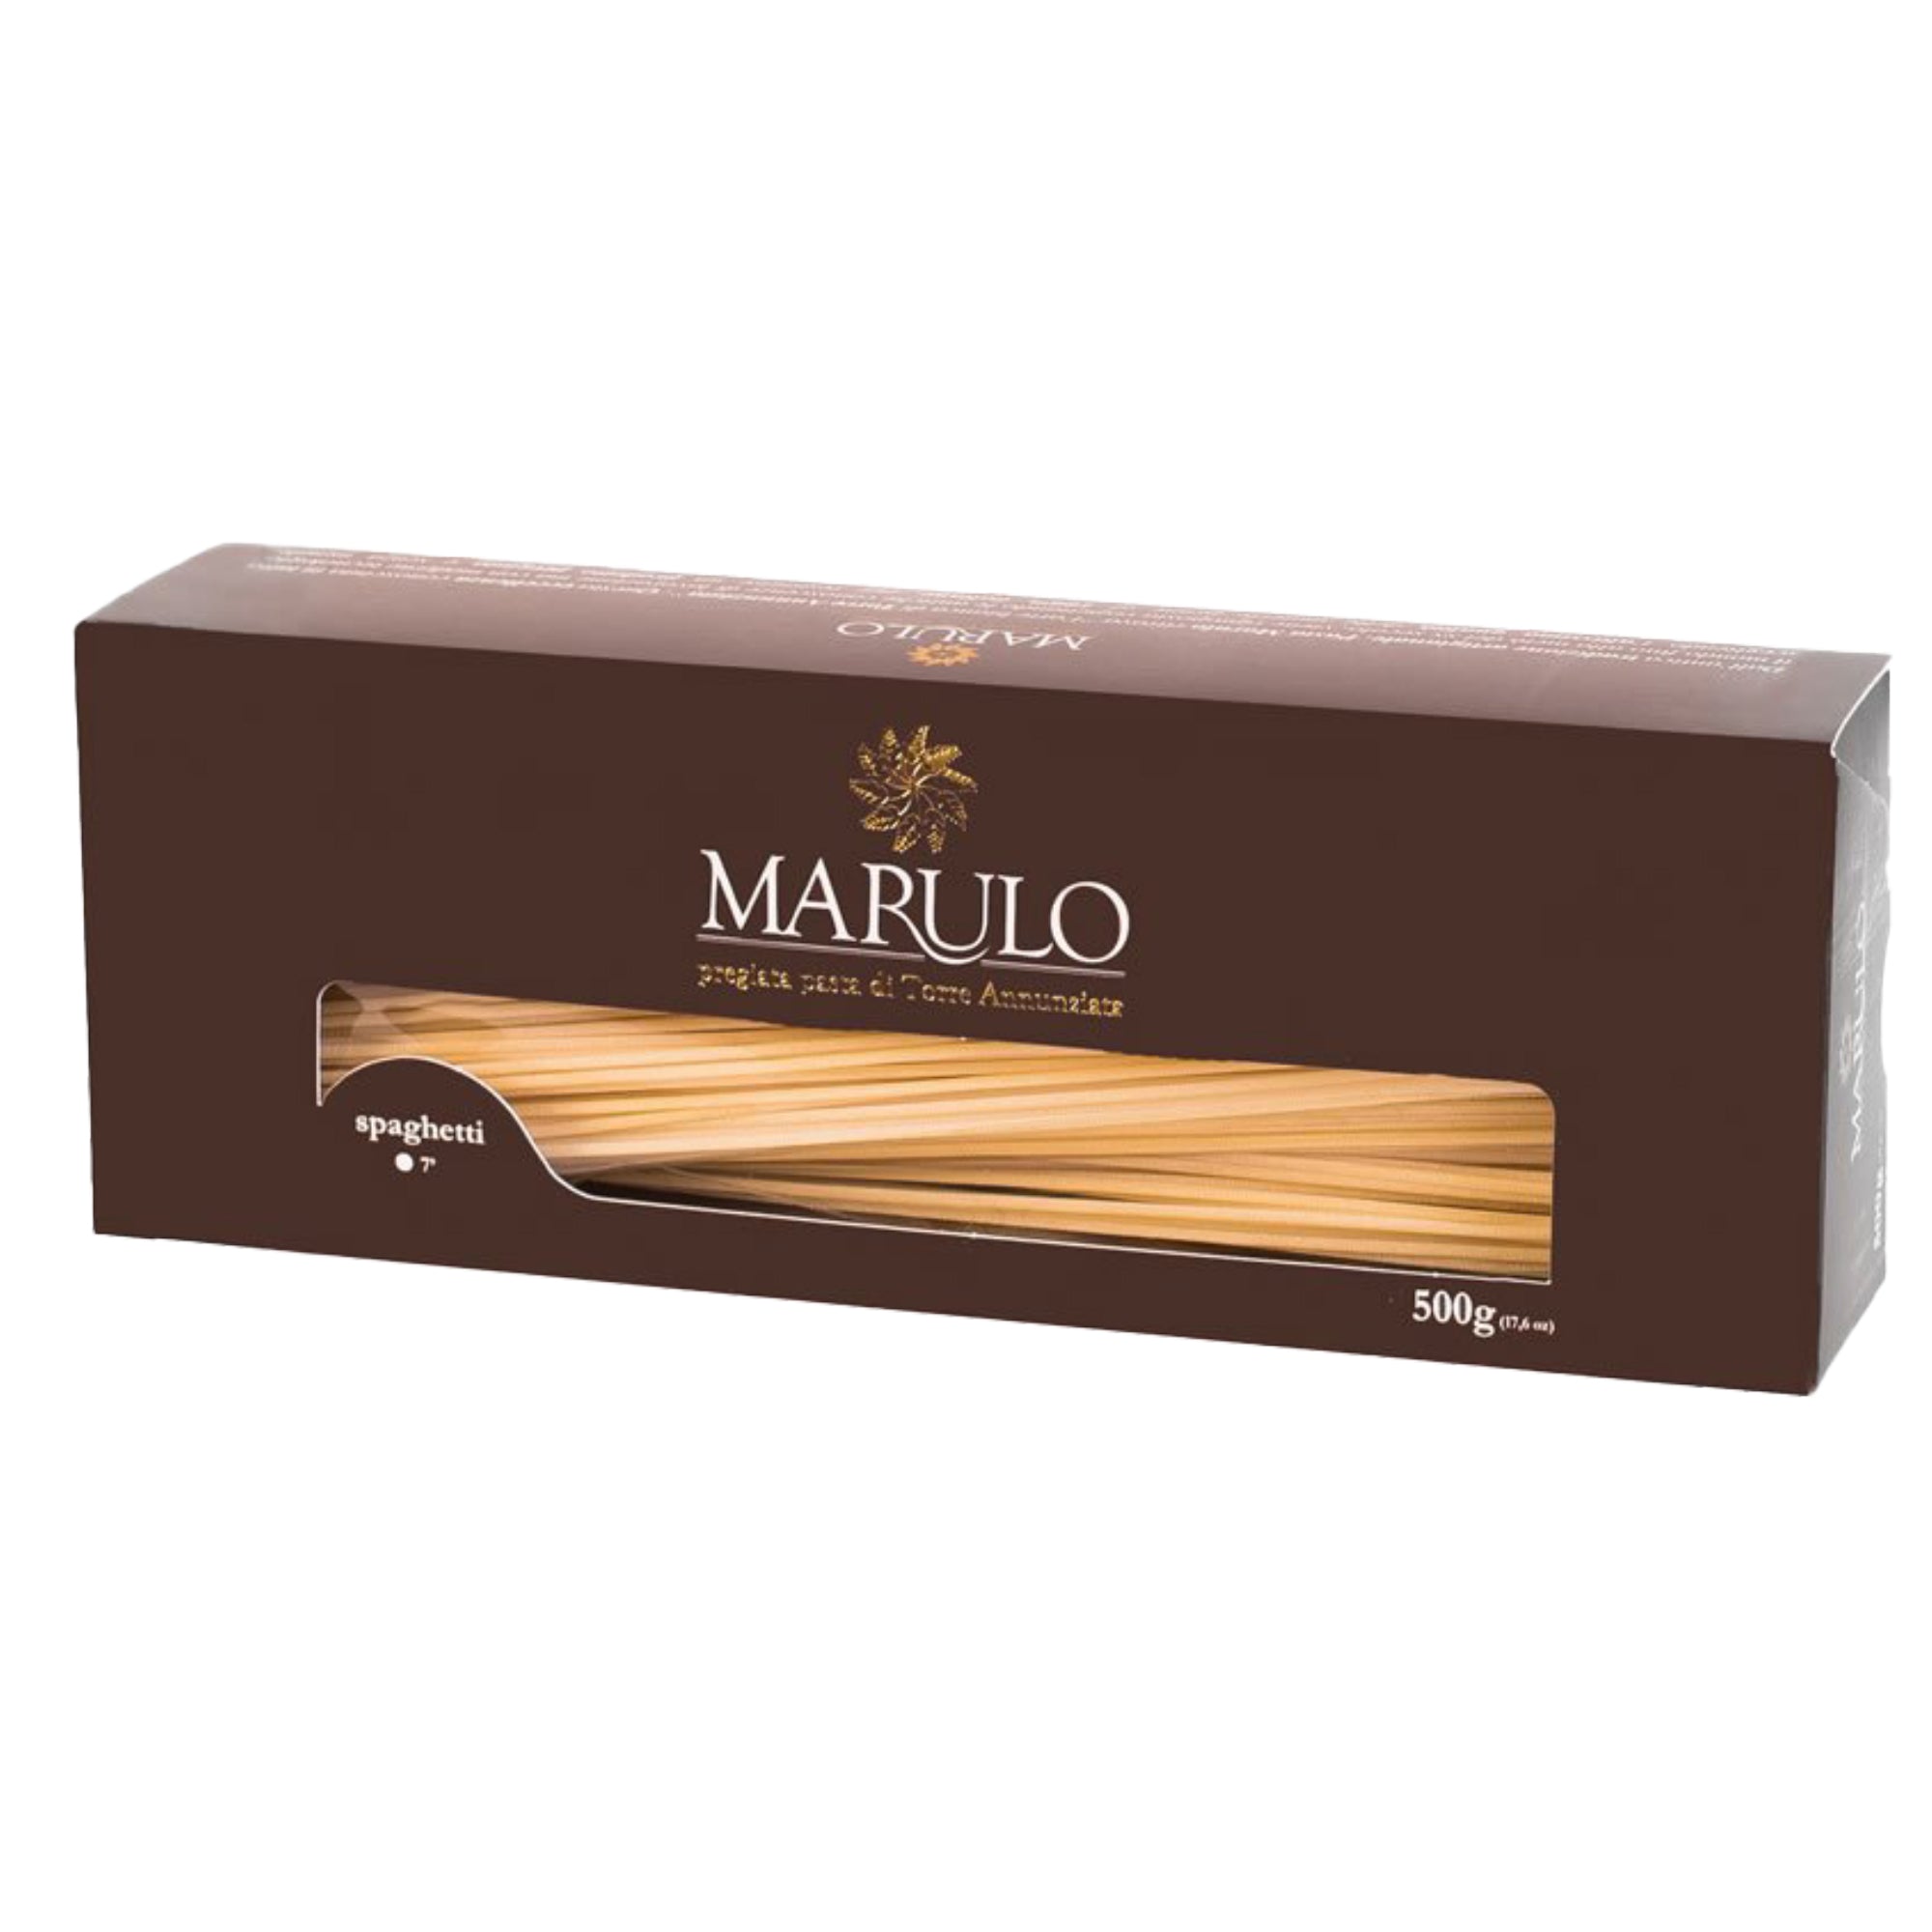 Marulo Spaghetti Homemade Artisan Pasta